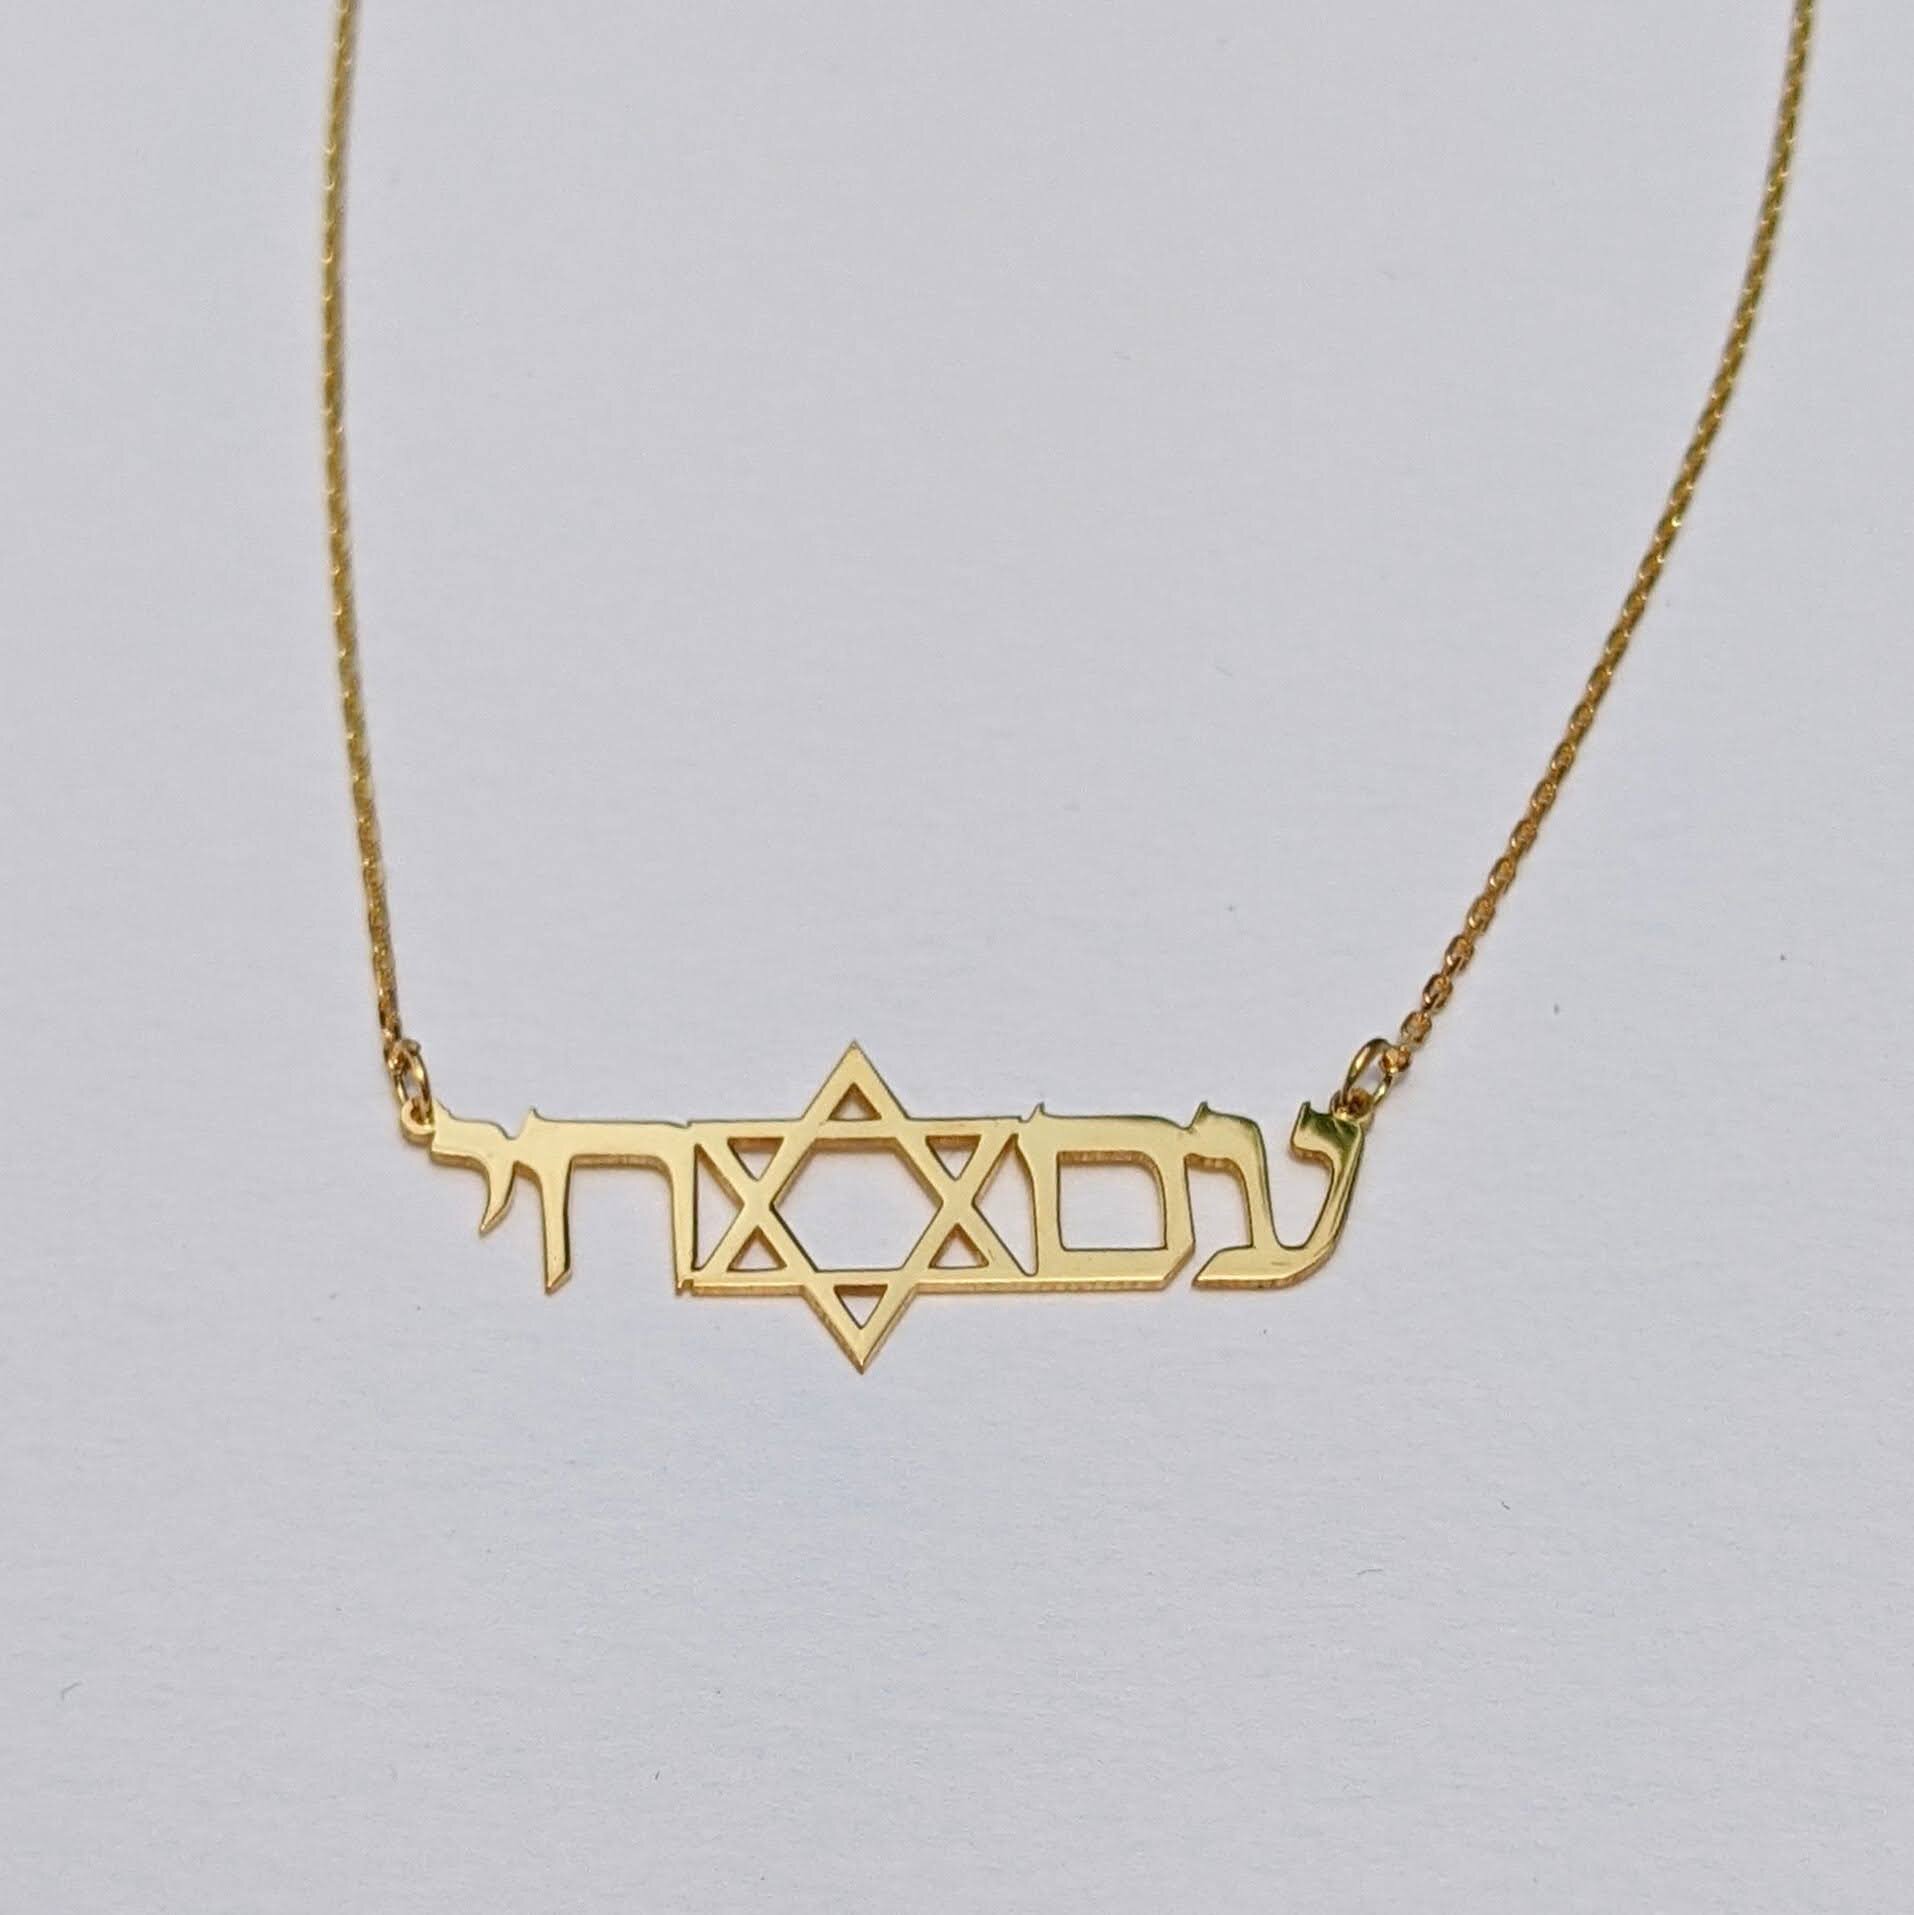 Sterling Silver Chai Necklace - Am Israel Chai , Jewish & Israeli Jewelry